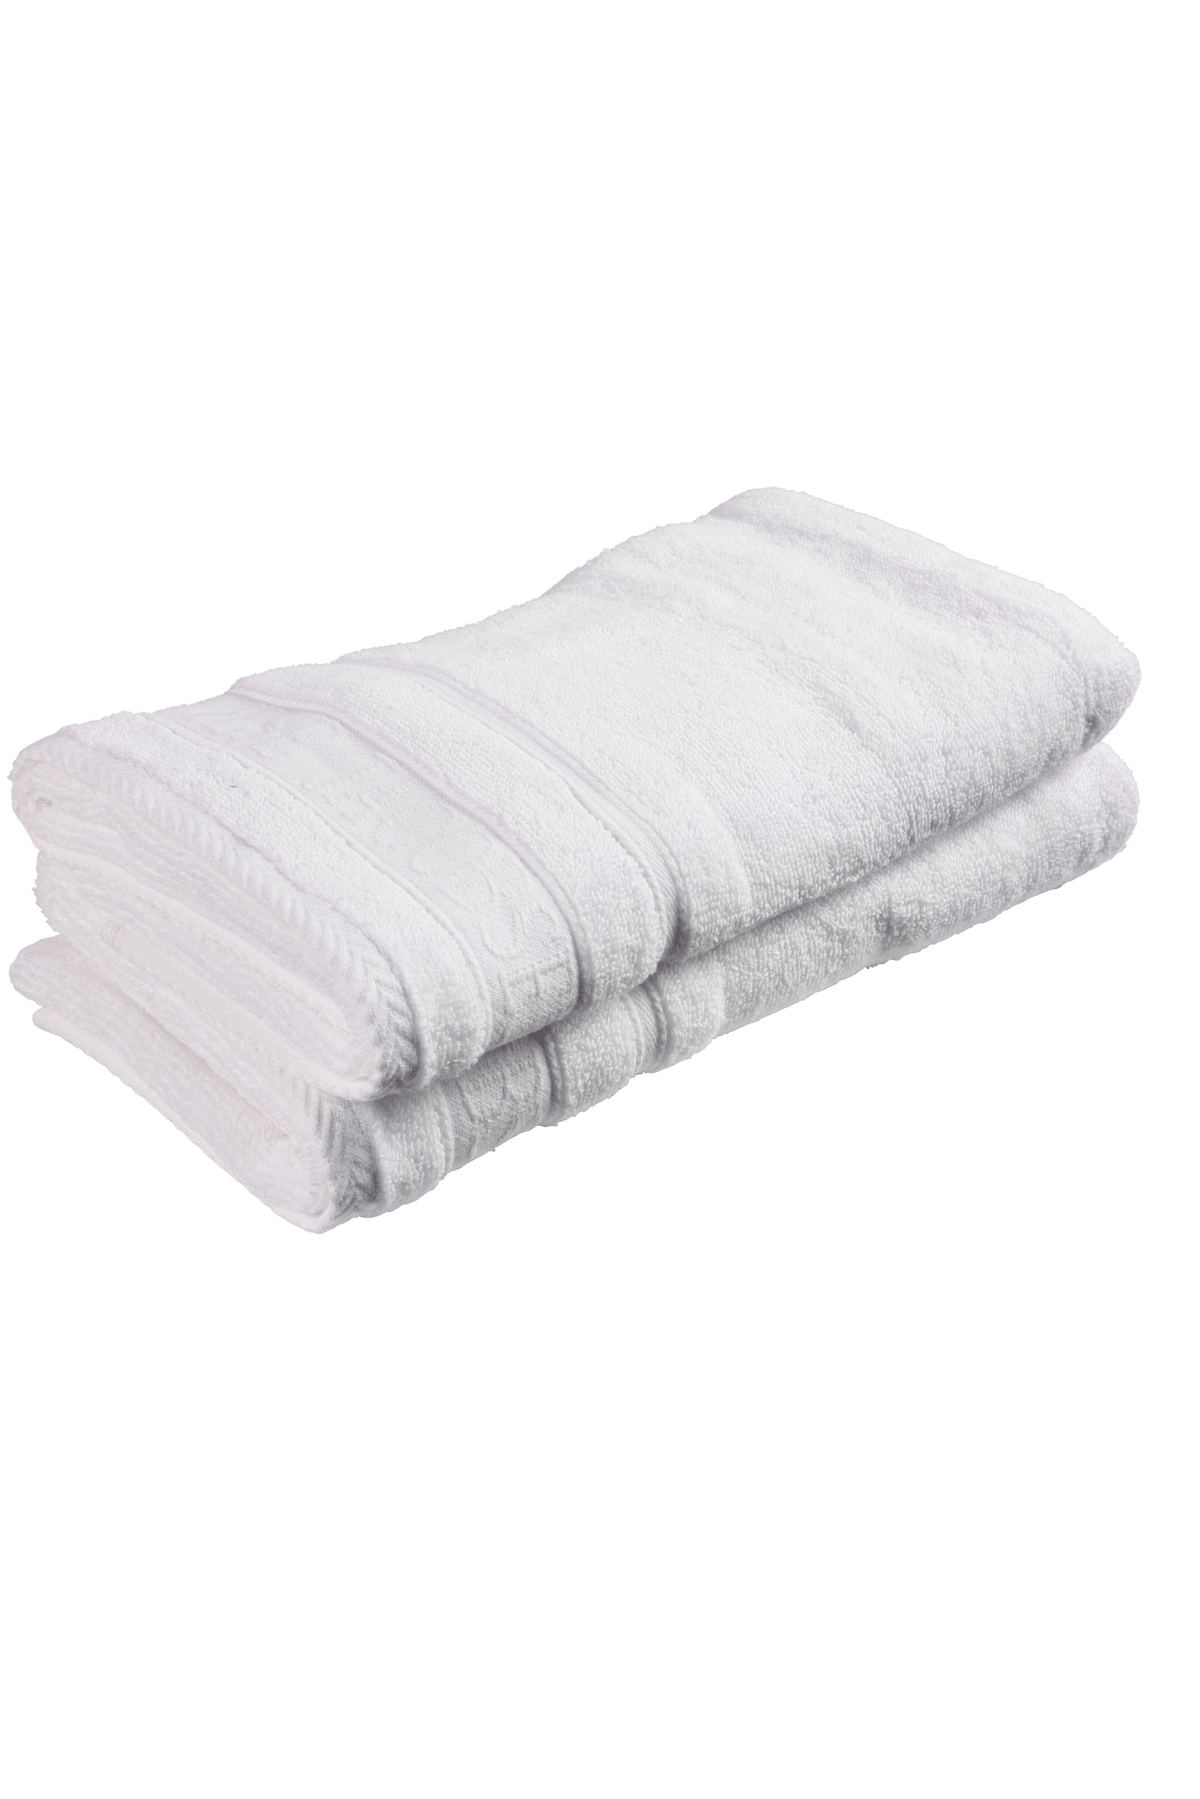 Hand Towel - White Cotton